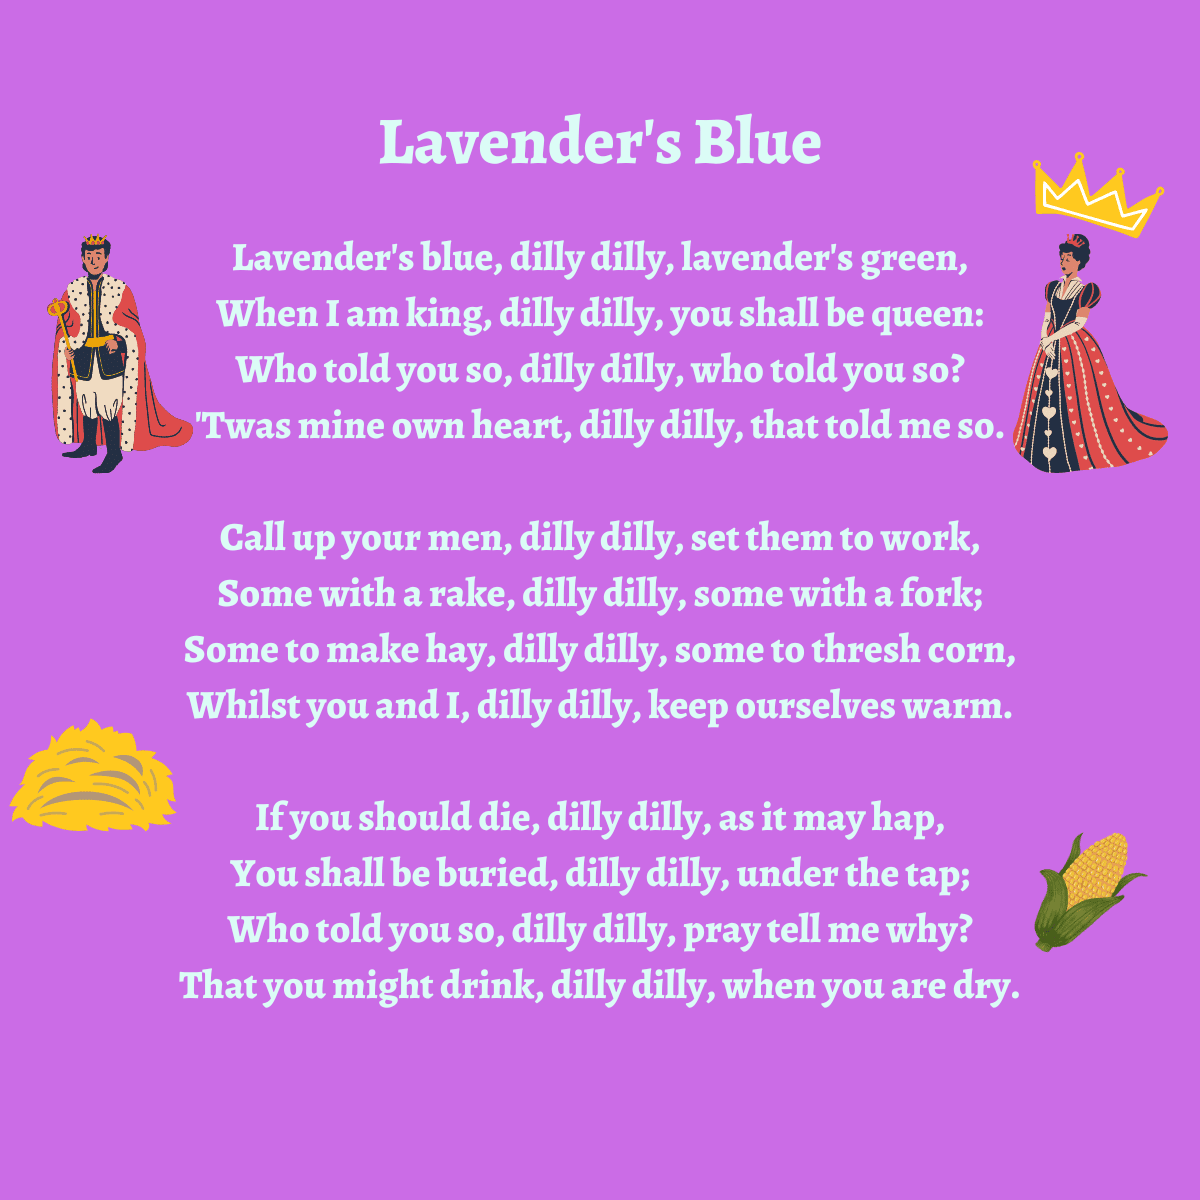 Lavender's Blue lyrics